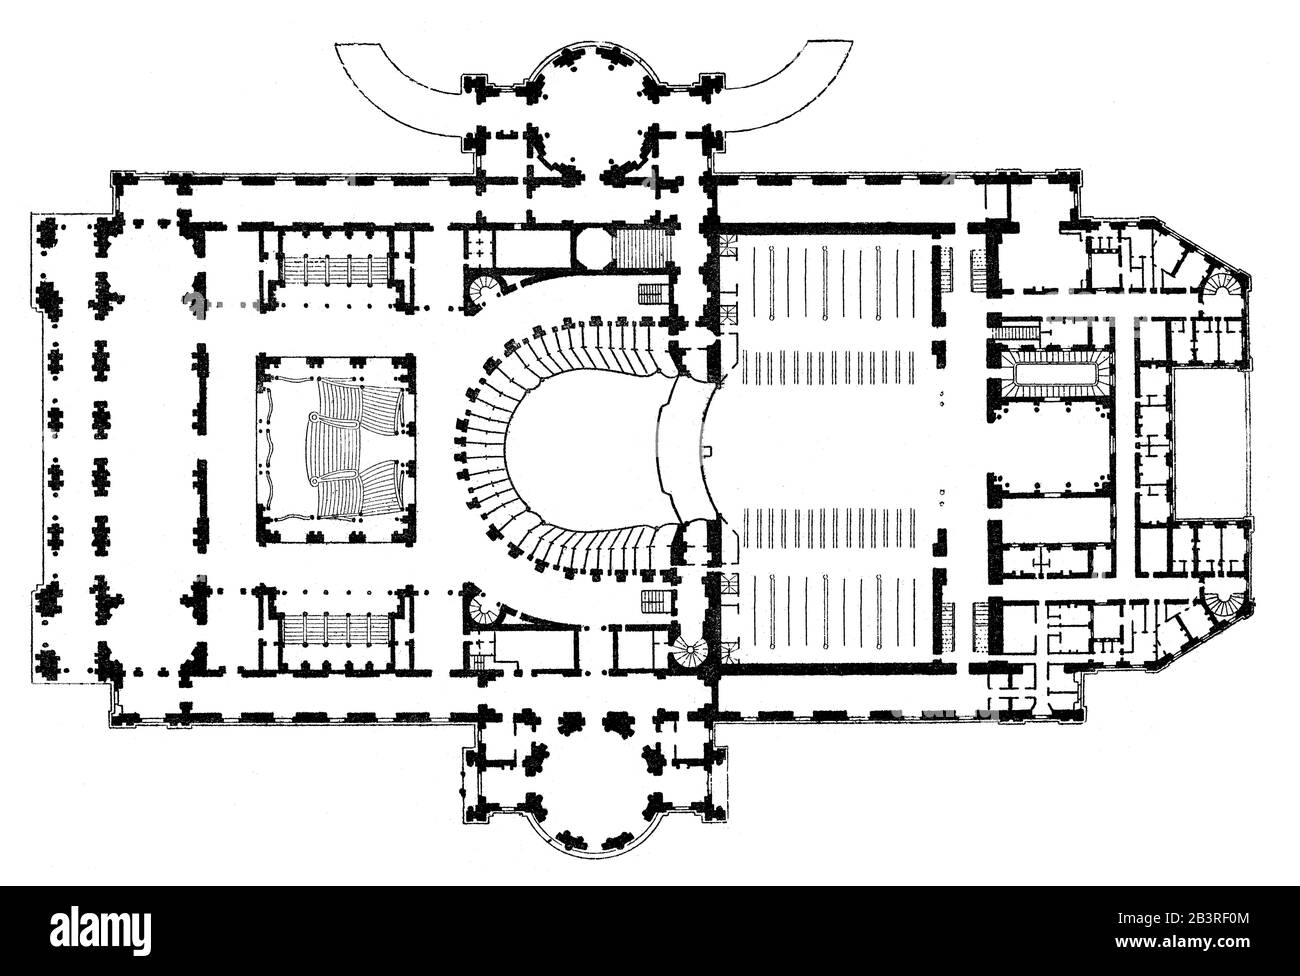 Ground plan of the Palais Garnier, Place de l'Opéra, Paris, France, 19th century Stock Photo